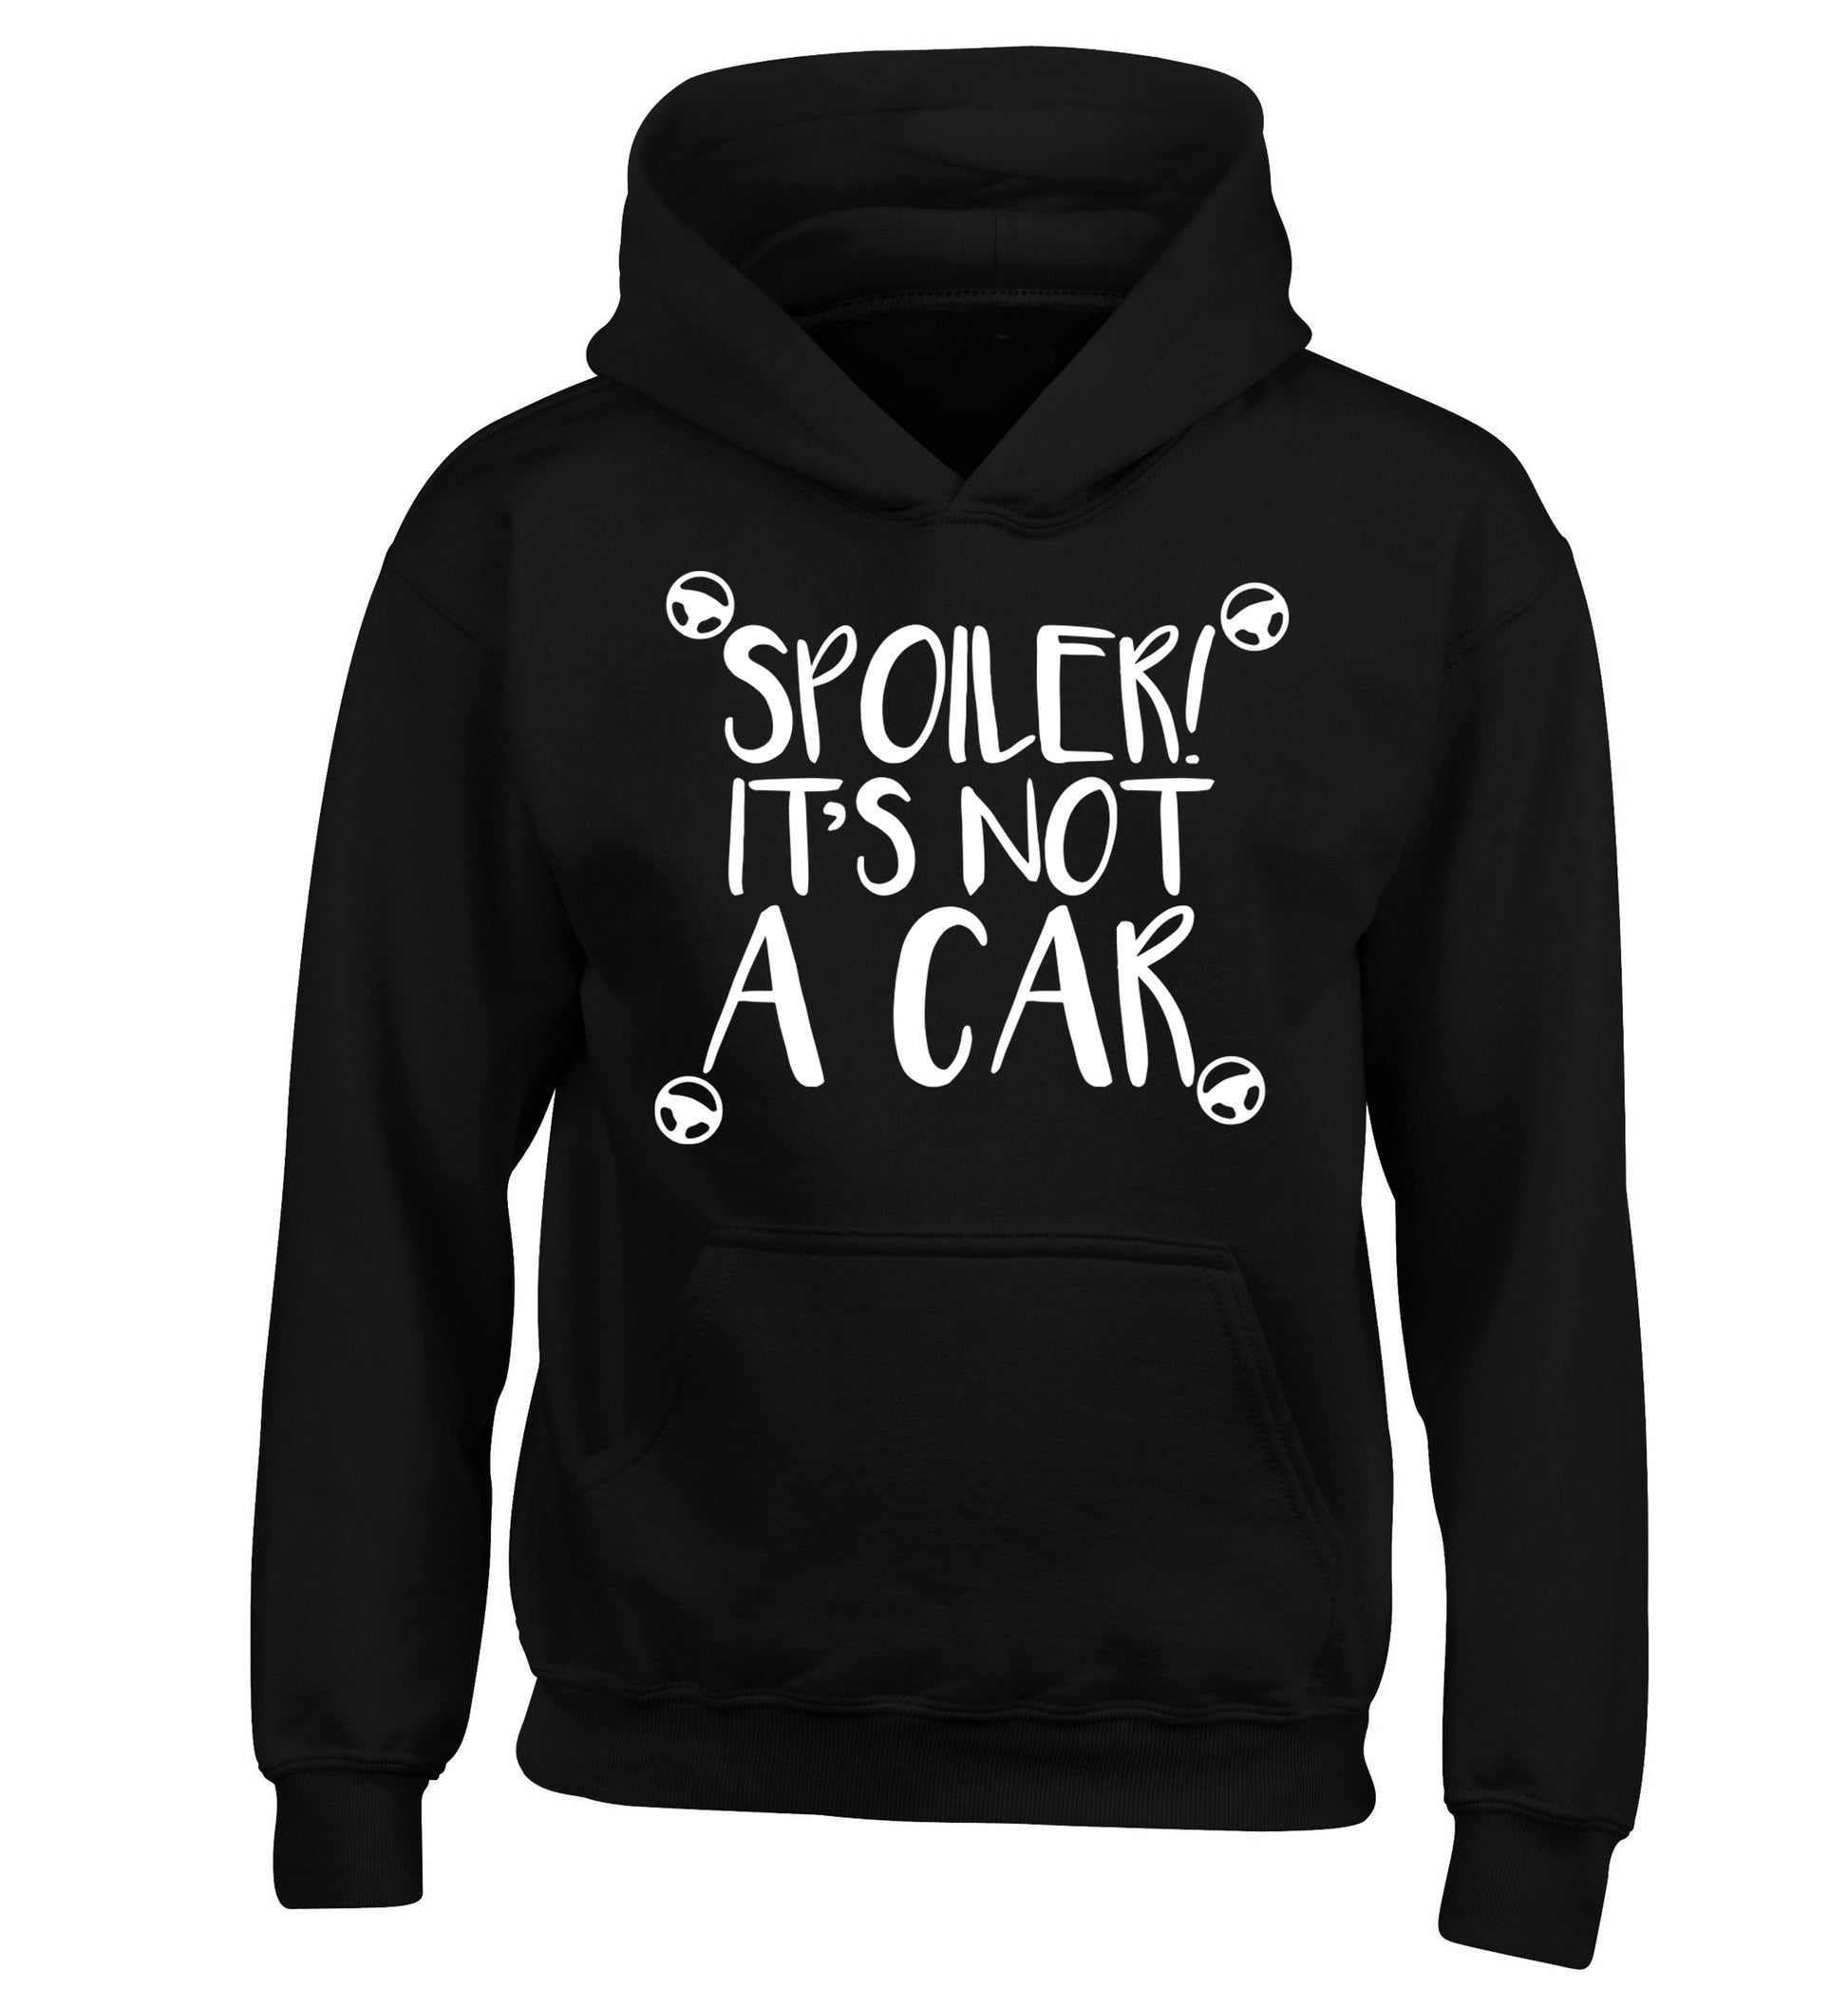 Spoiler it's not a car children's black hoodie 12-13 Years